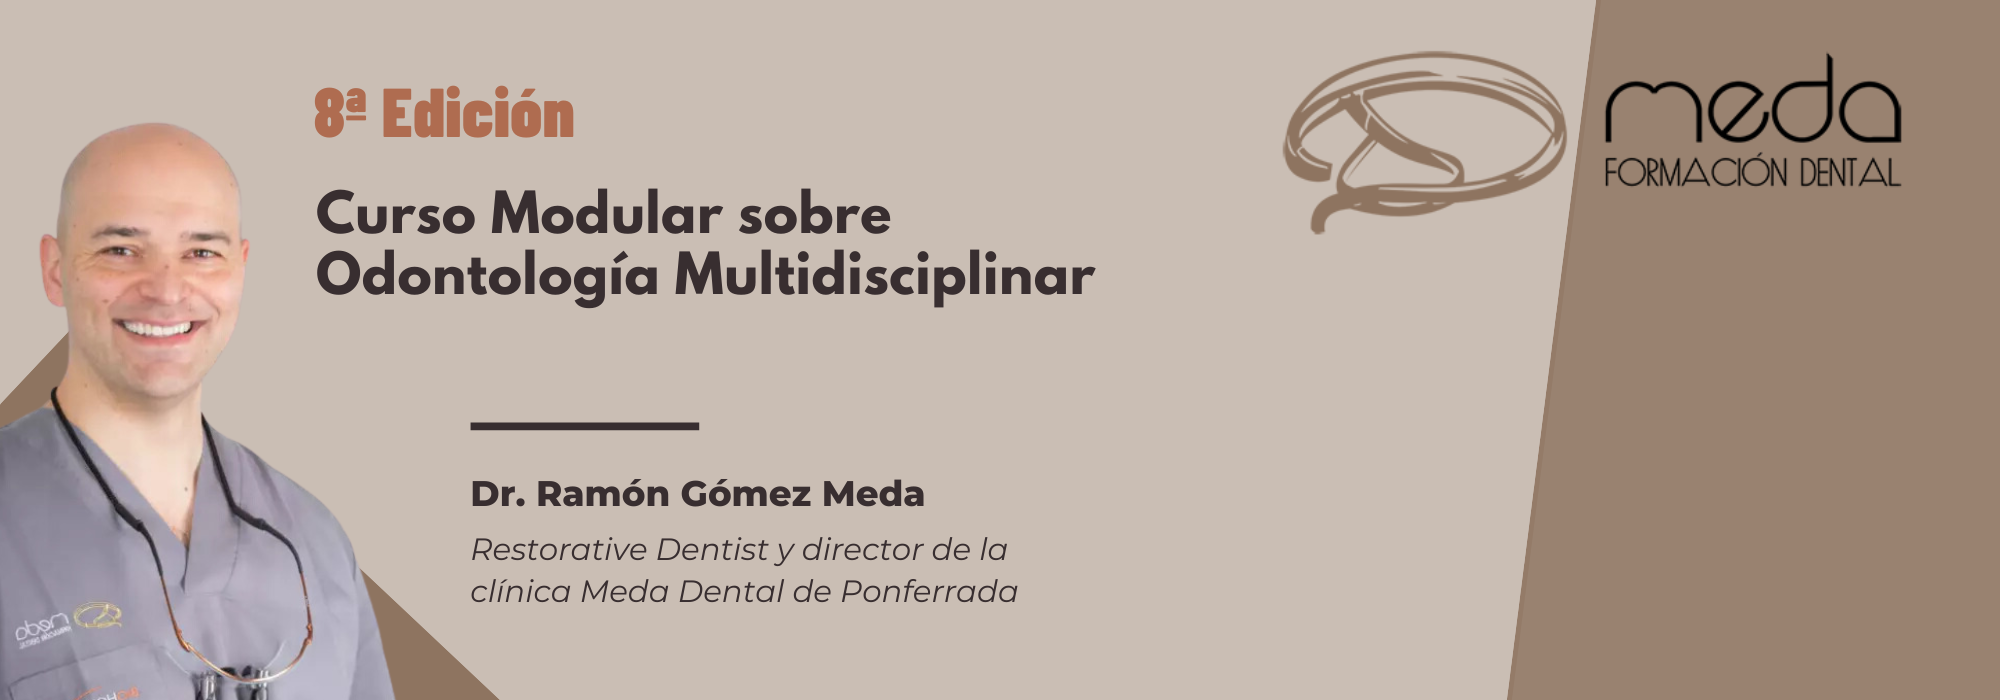 Curso modular Odontología Multidisciplinar